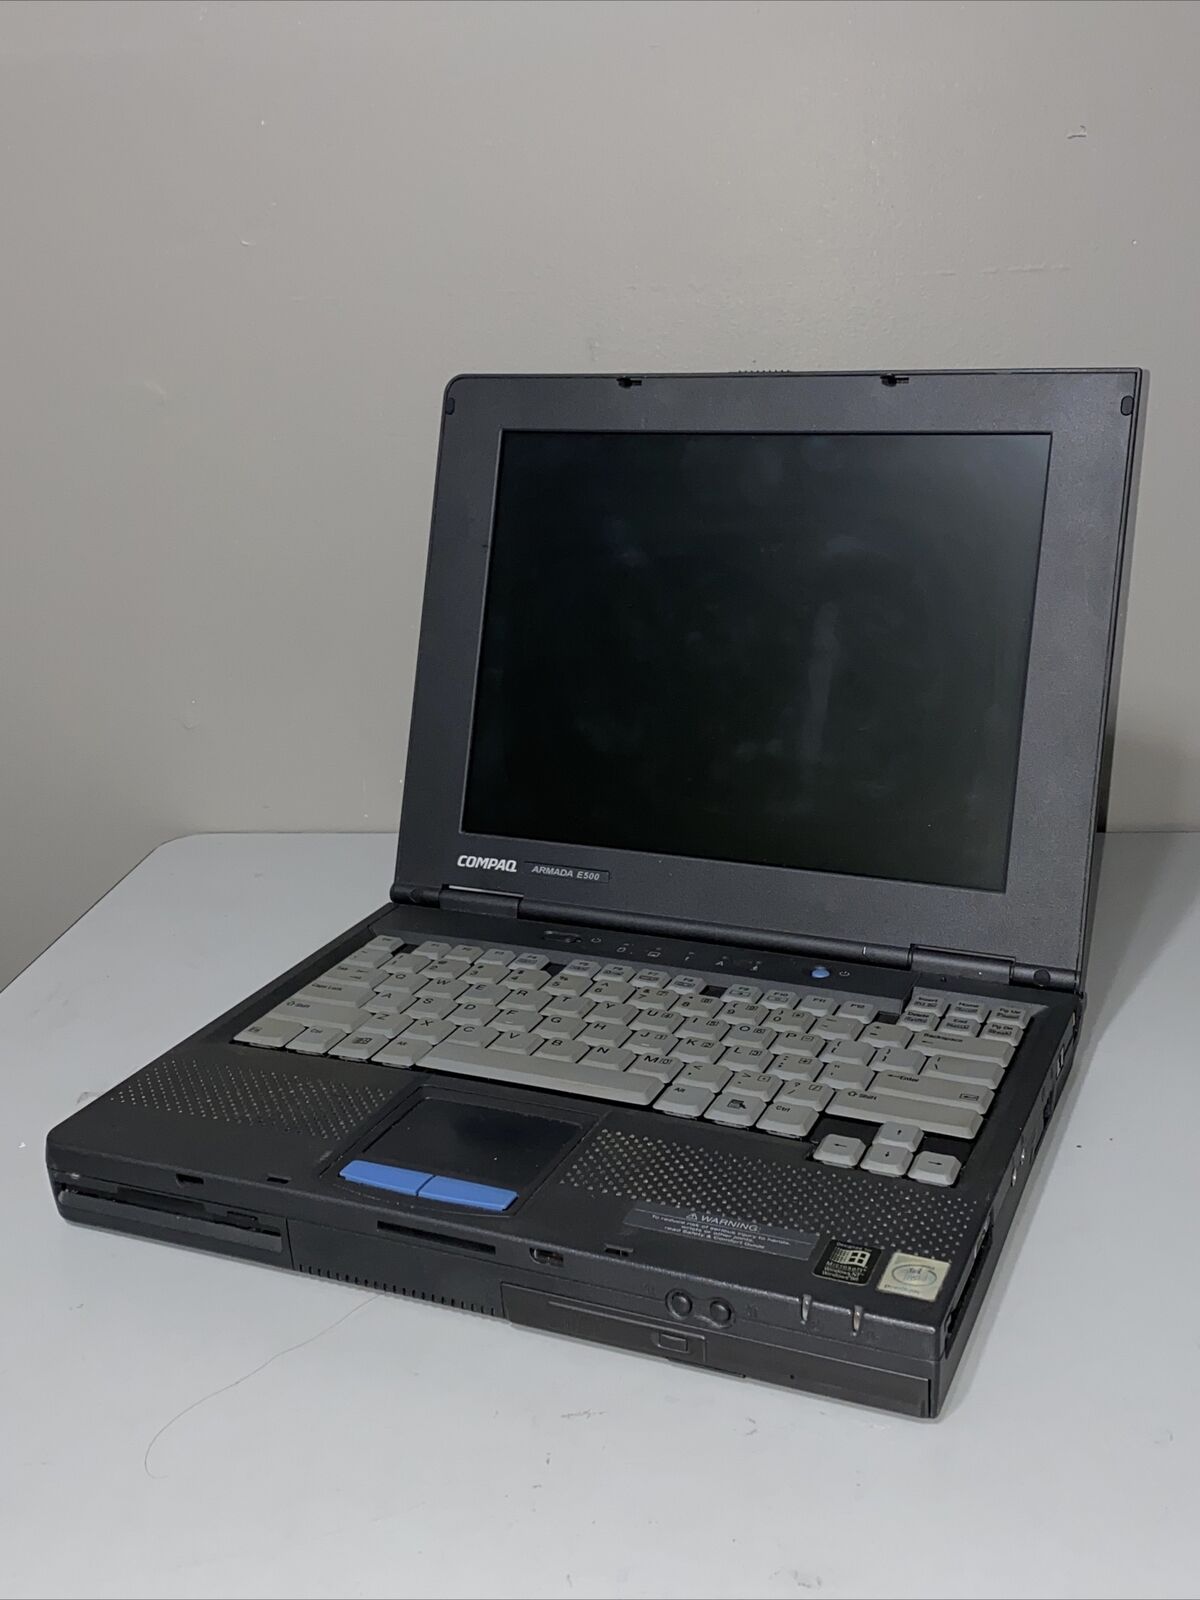 Vintage Compaq Armada E500 PP2060 Laptop Computer Pentium II Windows 98 UNTESTED